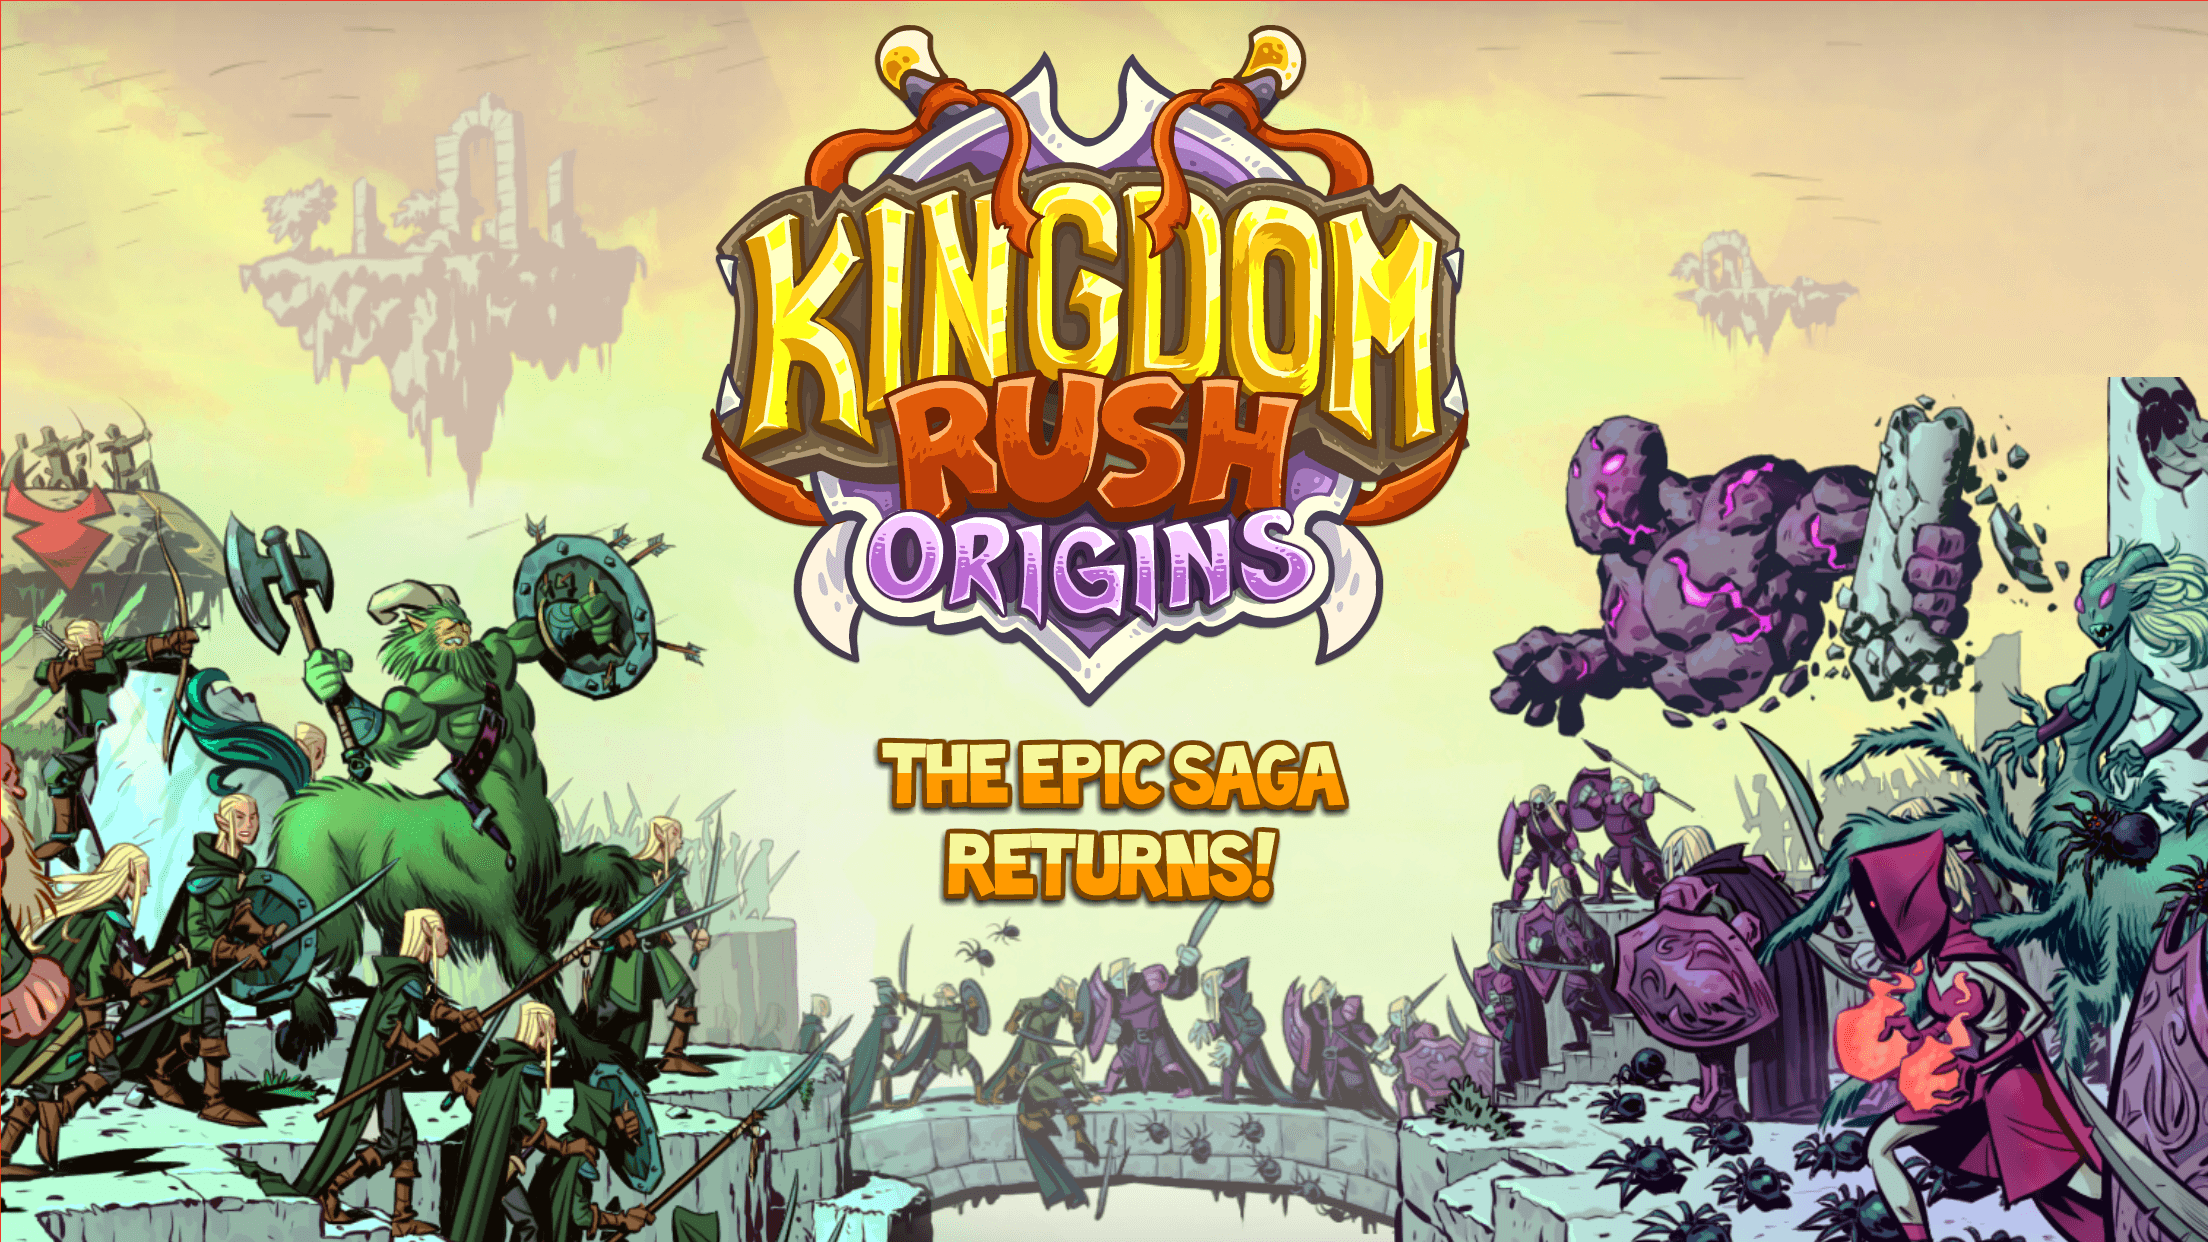 Kingdom rush origins pc cheat engine mod